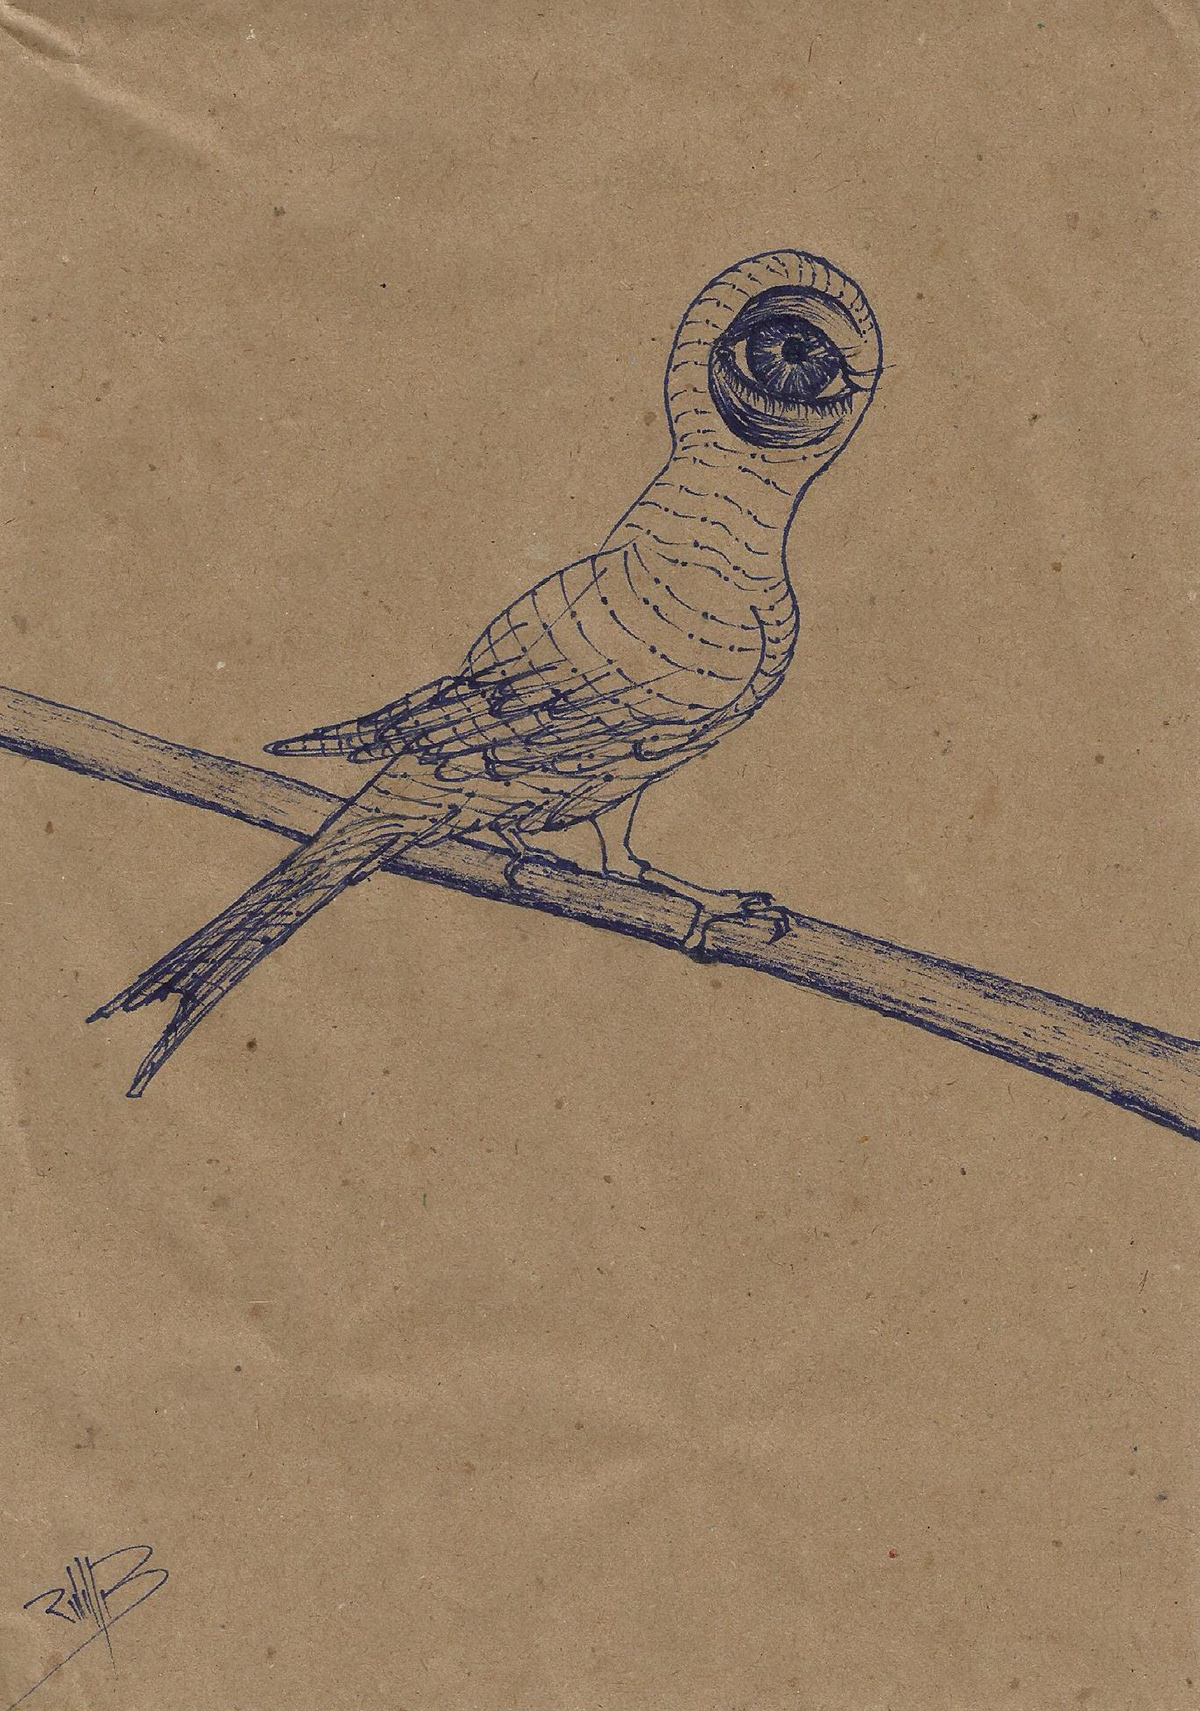 Image may contain: bird and drawing